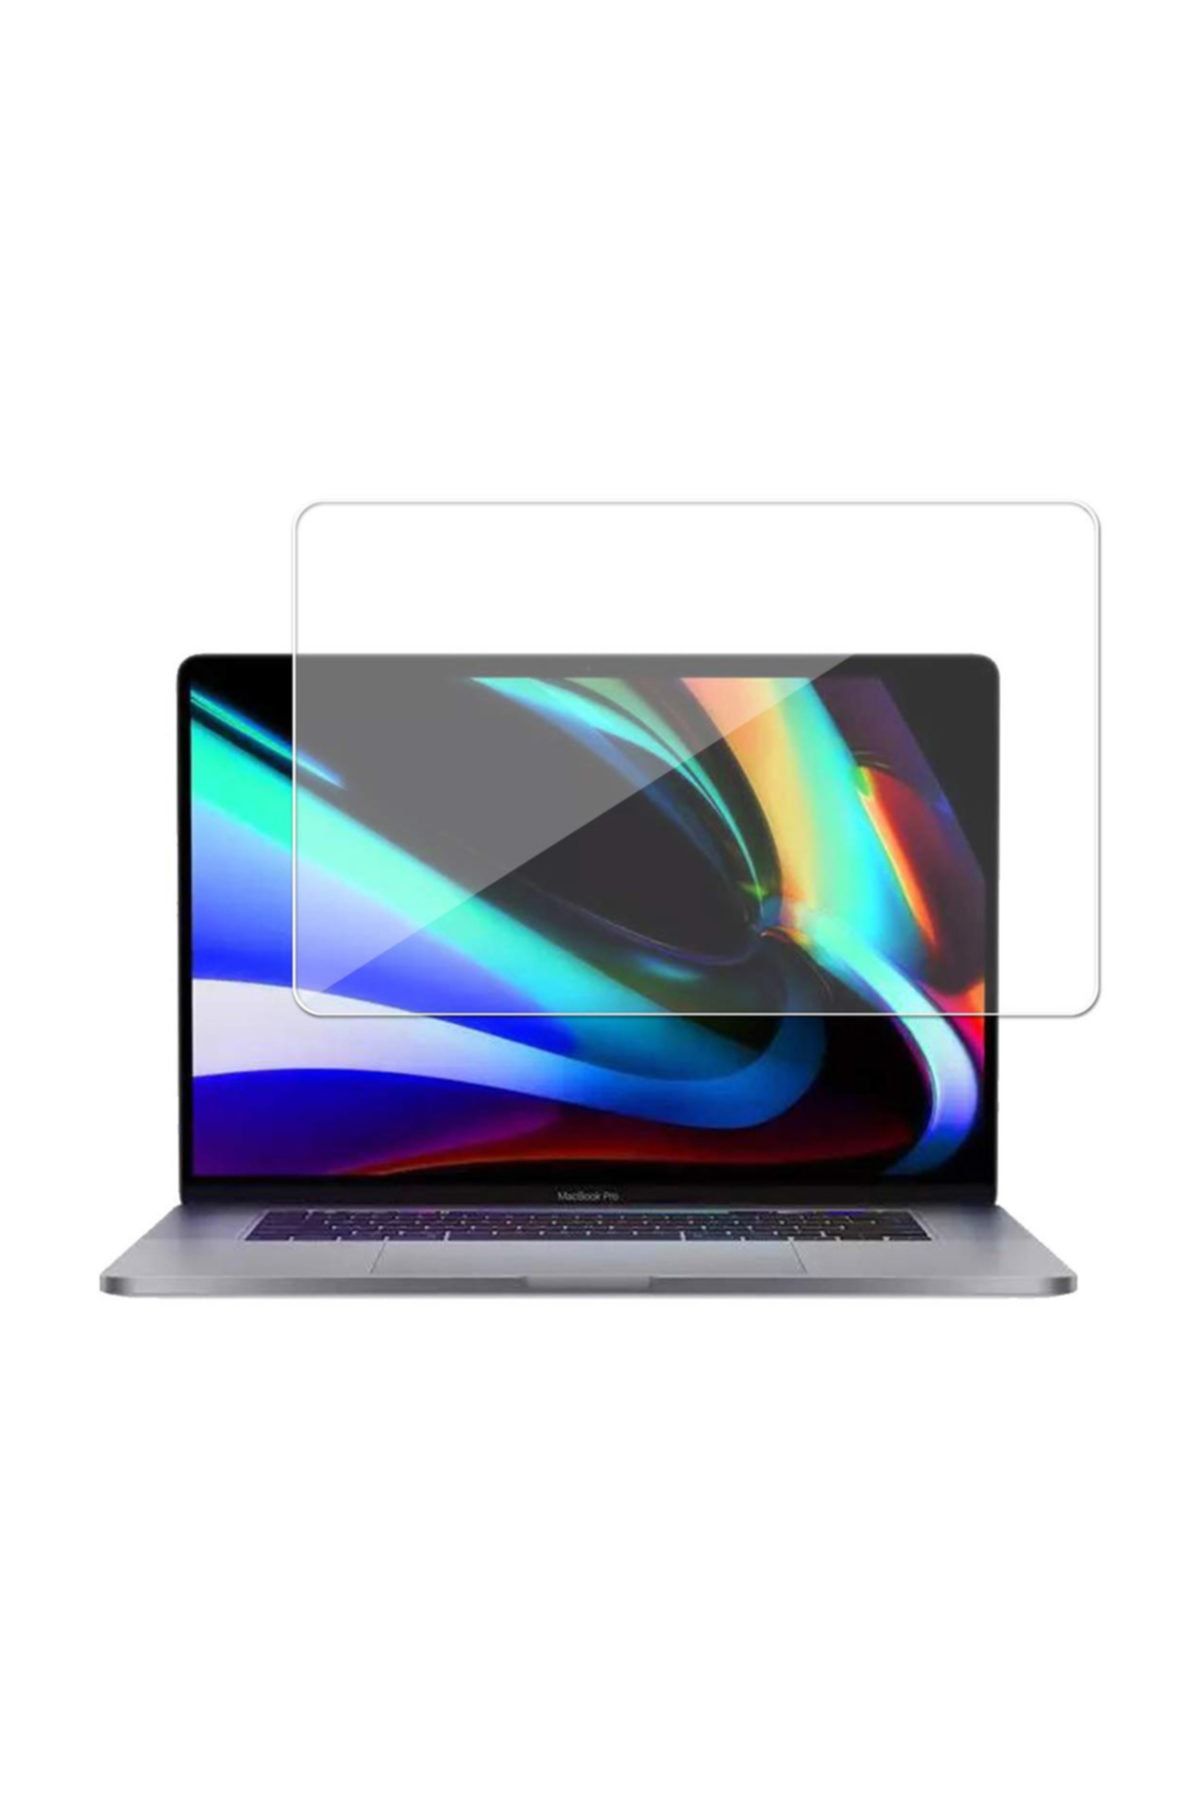 Microcase Macbook Pro 16 A2141 A2142 Nano Esnek Ekran Koruma Filmi